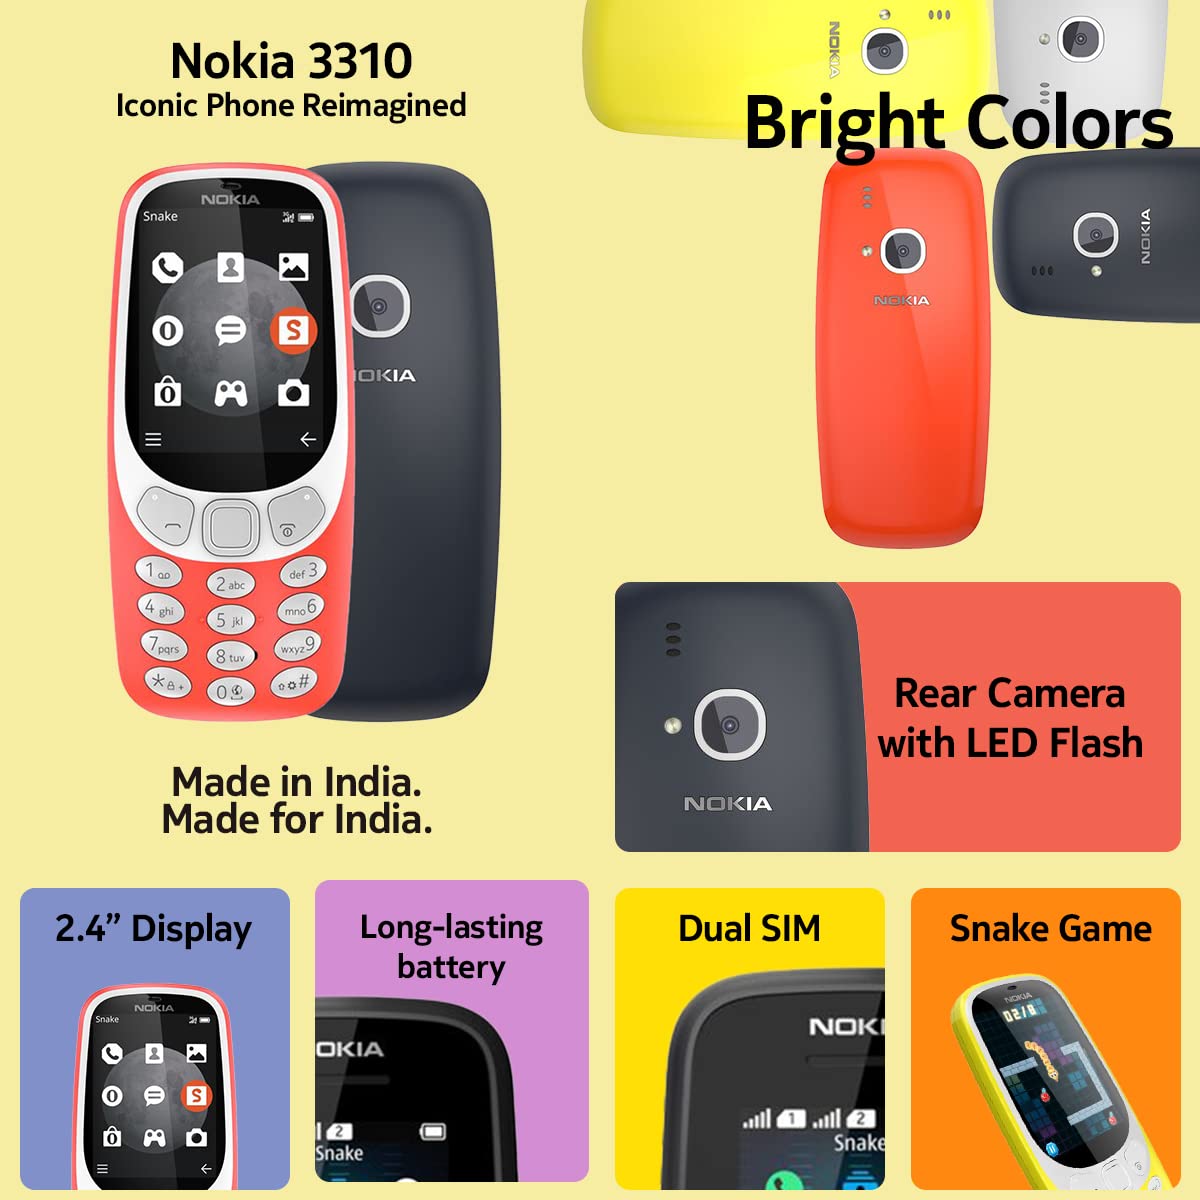 Nokia 3310 - New fonezworldarklow